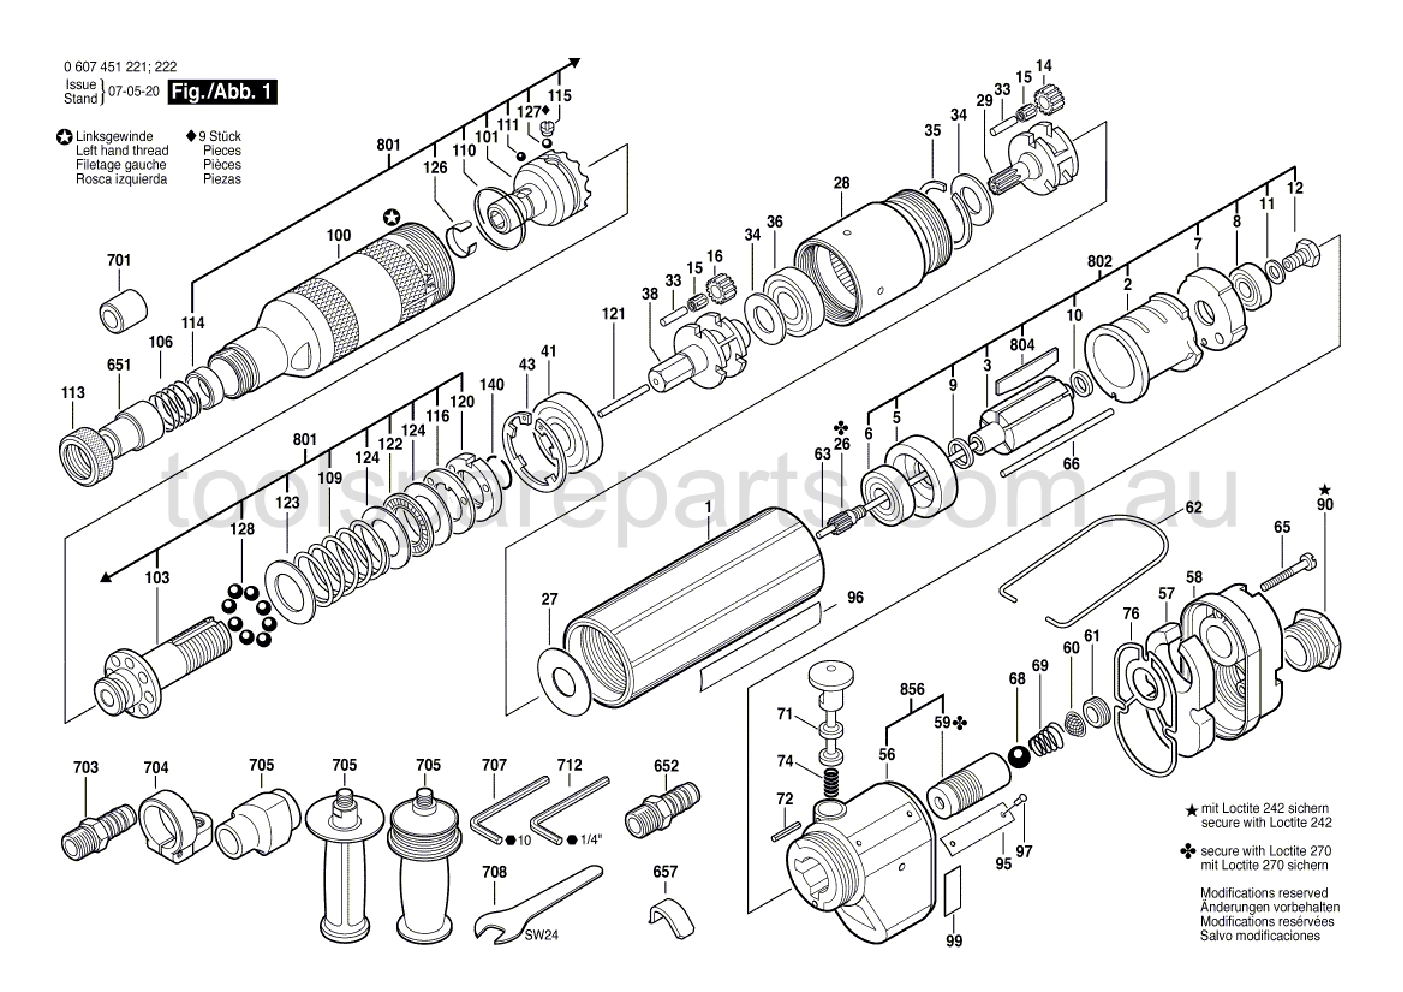 Bosch 370 WATT-SERIE 0607451221  Diagram 1